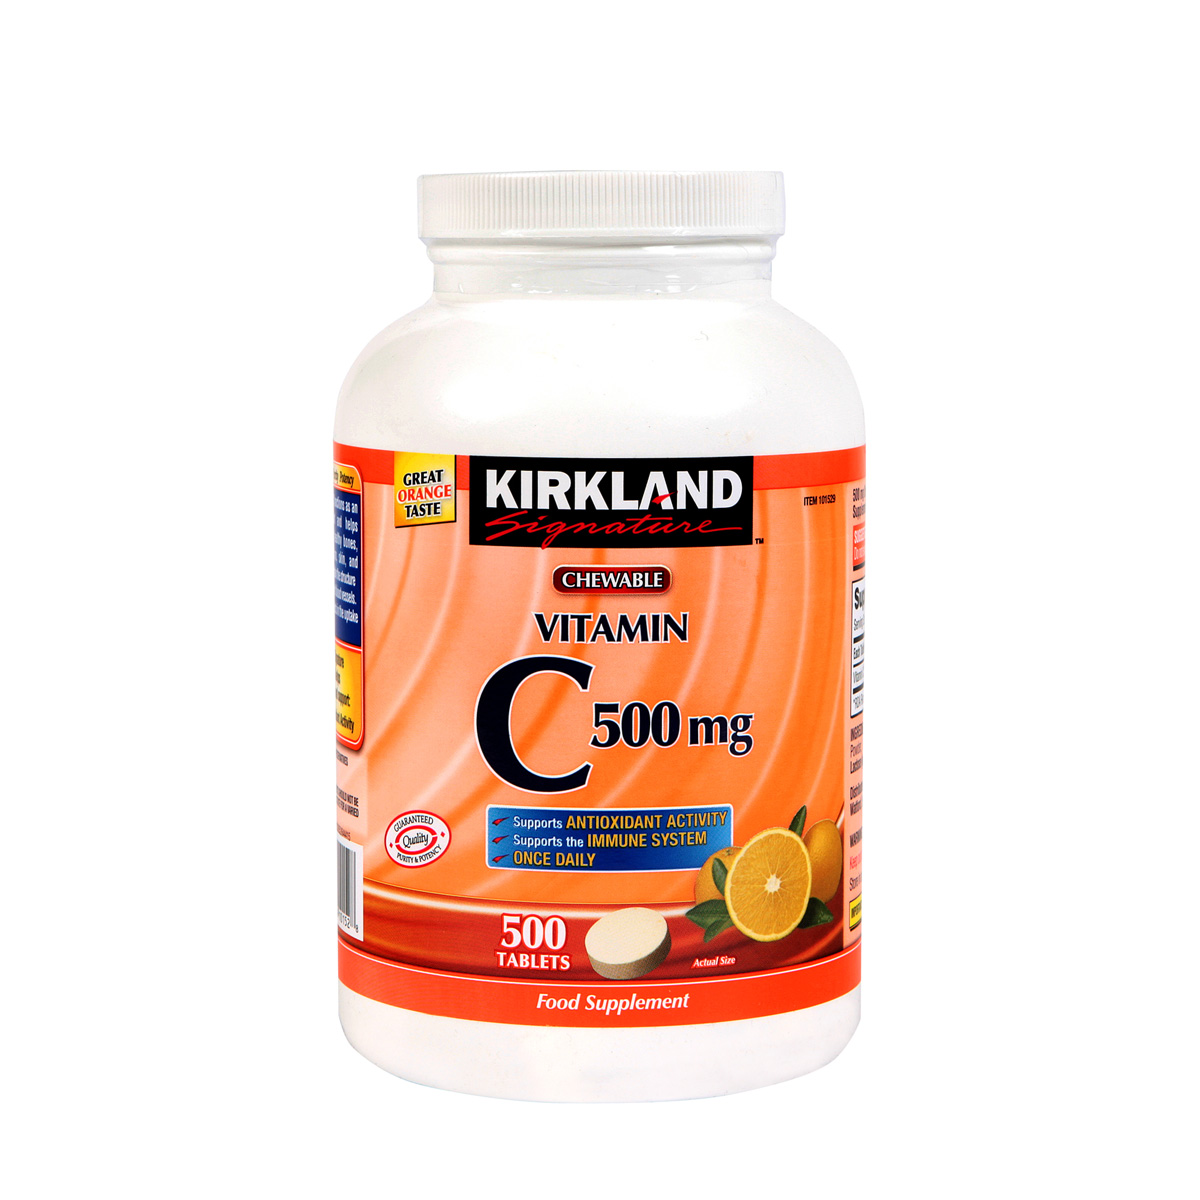 Chewable vitamin. Chewable Vitamin c 500 MG. Витамин с 500 мг. Витамин с жевательные таблетки 500 мг.